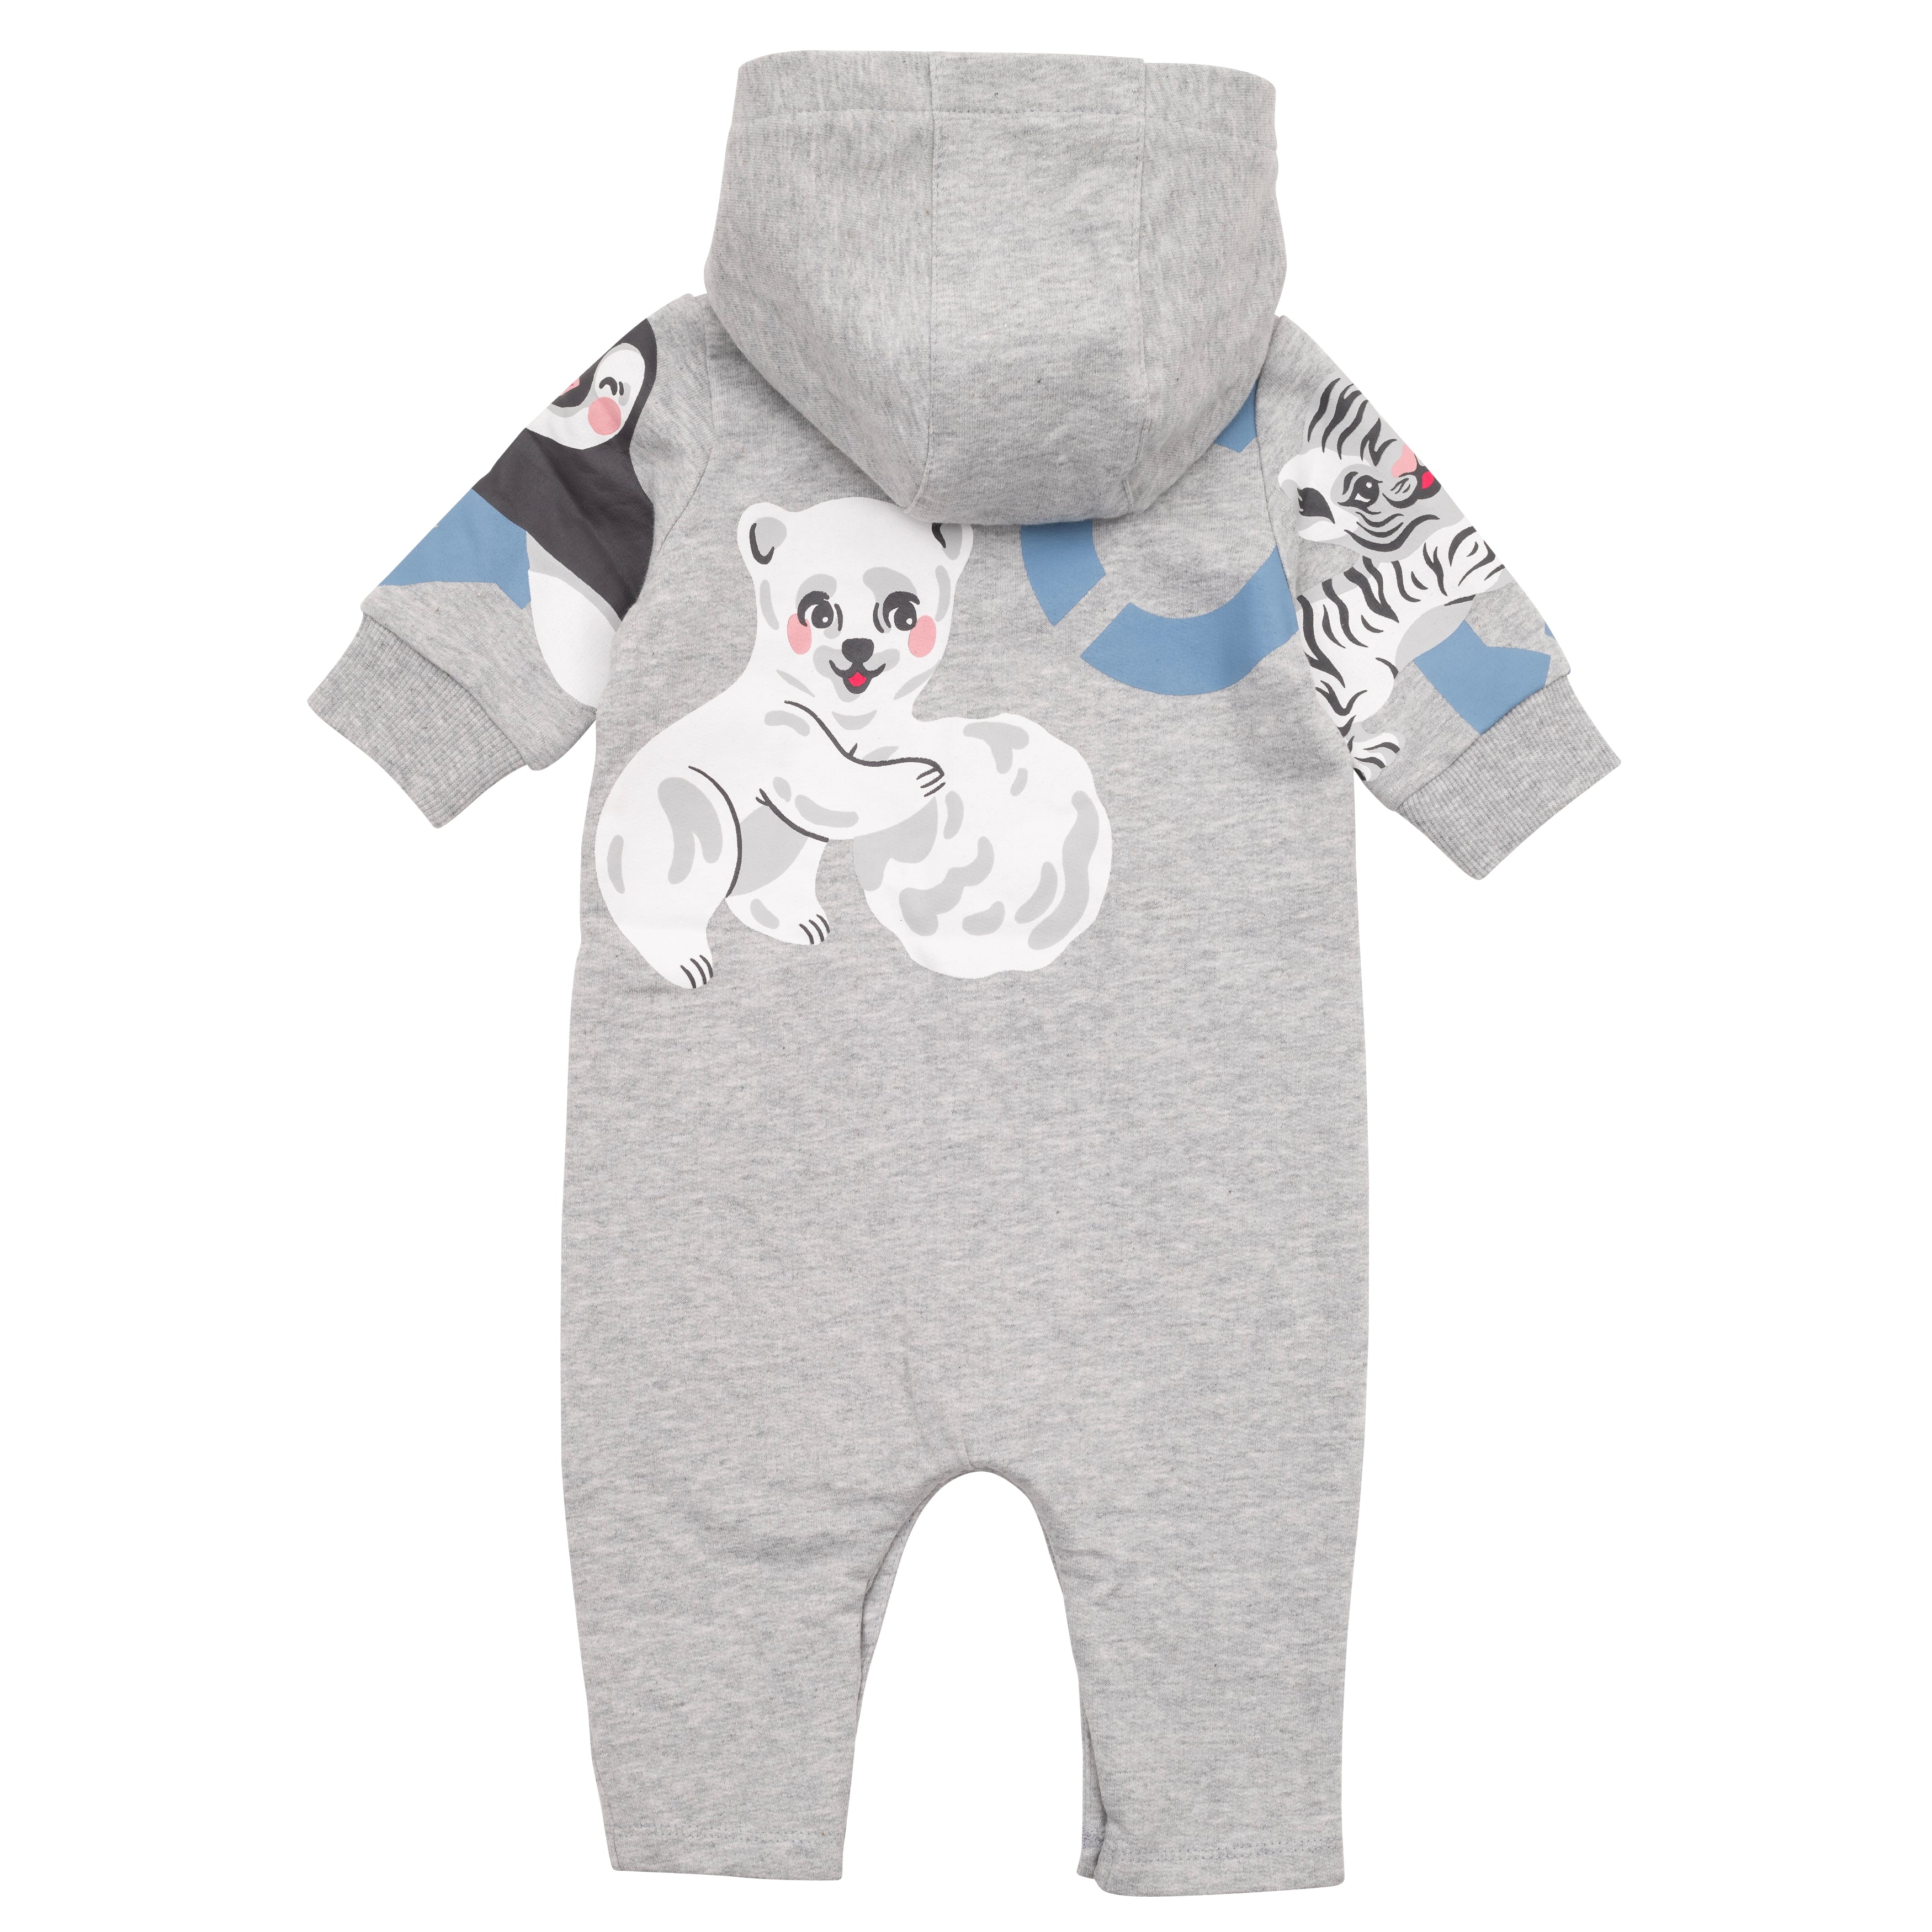 Baby Boys Grey Printed Babysuit